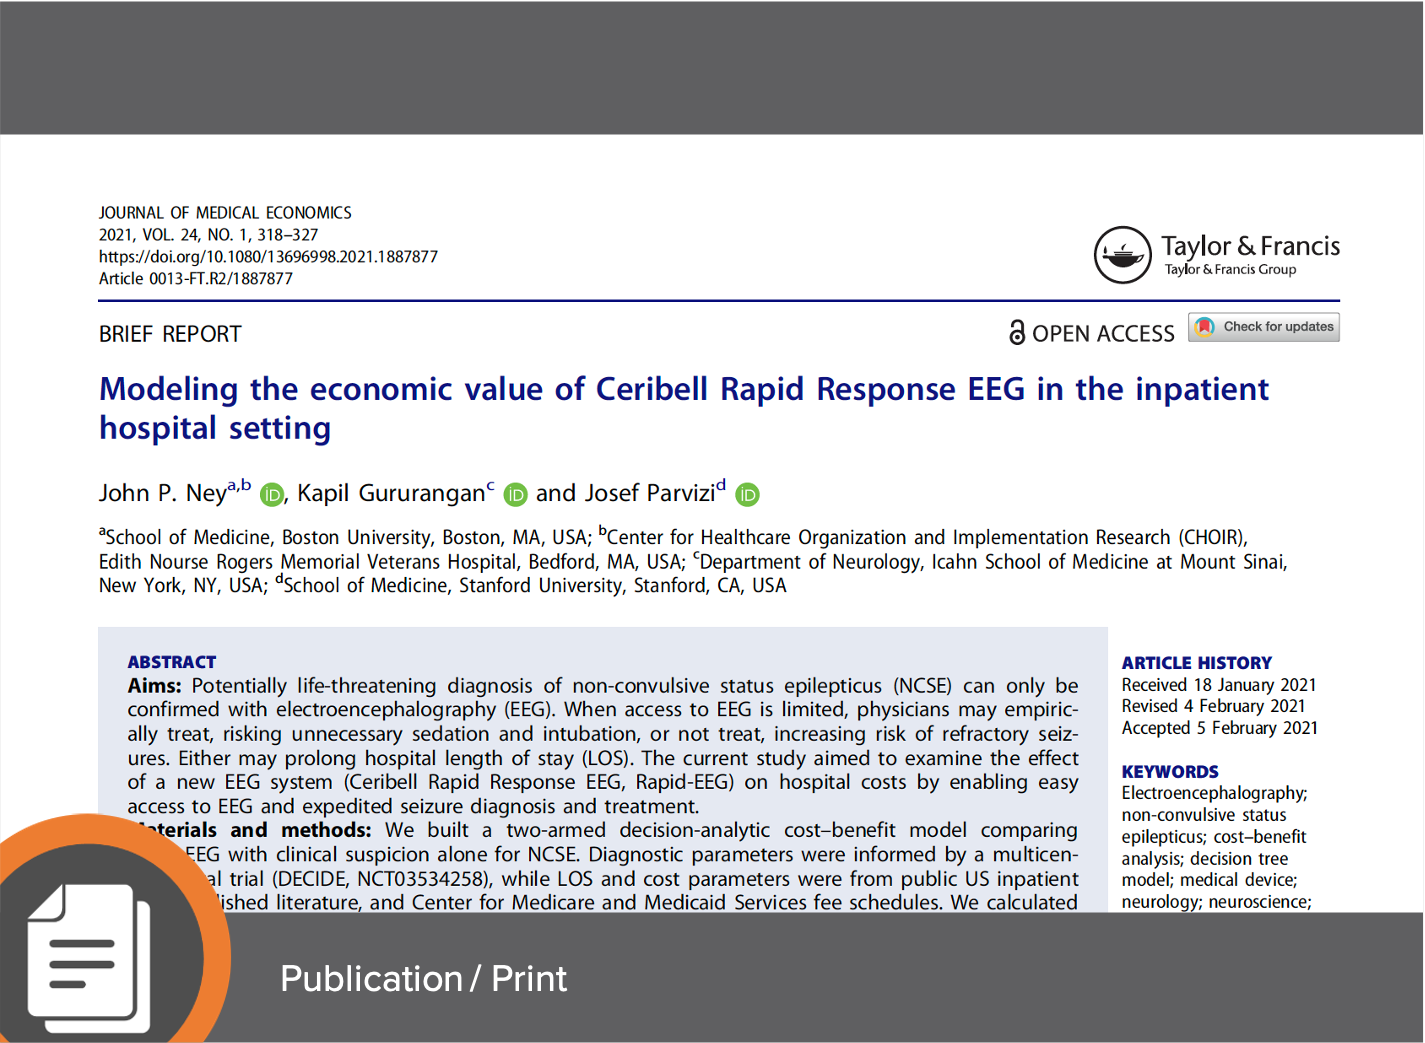 Ceribell Health Economics Manuscript: Use of Ceribell EEG results in average savings of >$5k per patient